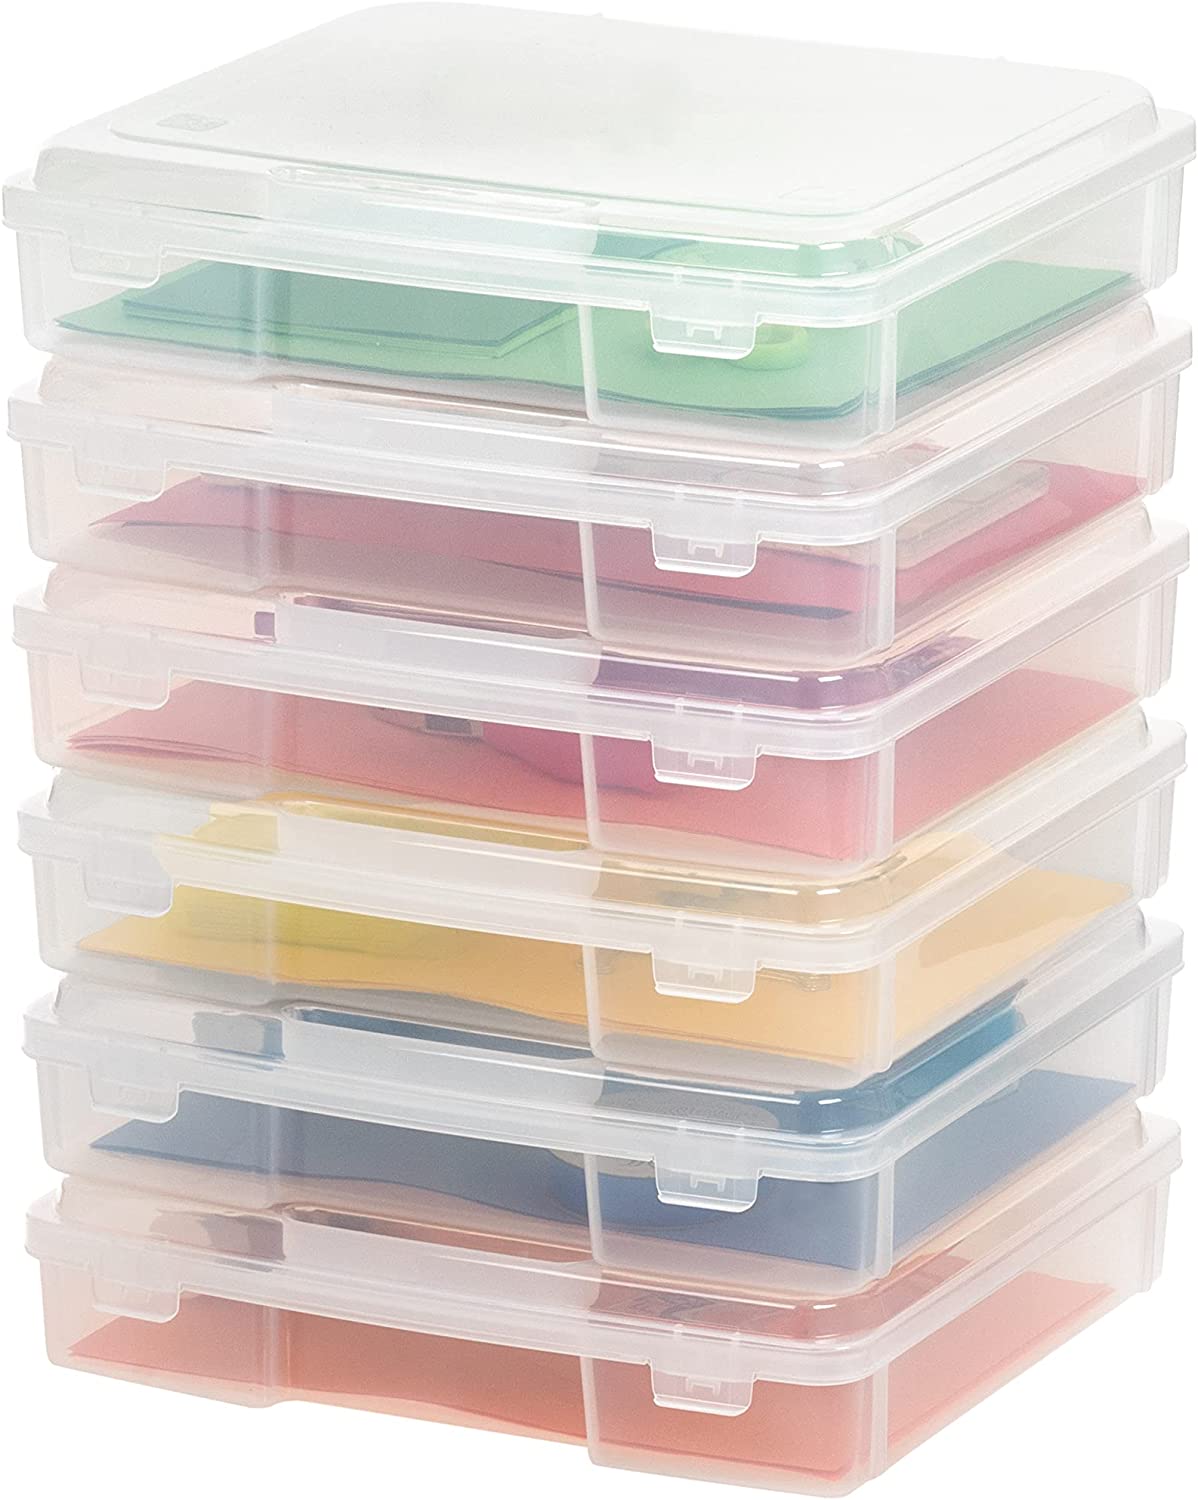 IRIS USA Stackable BPA-Free Portable Storage Organizer Boxes, 6-Pack